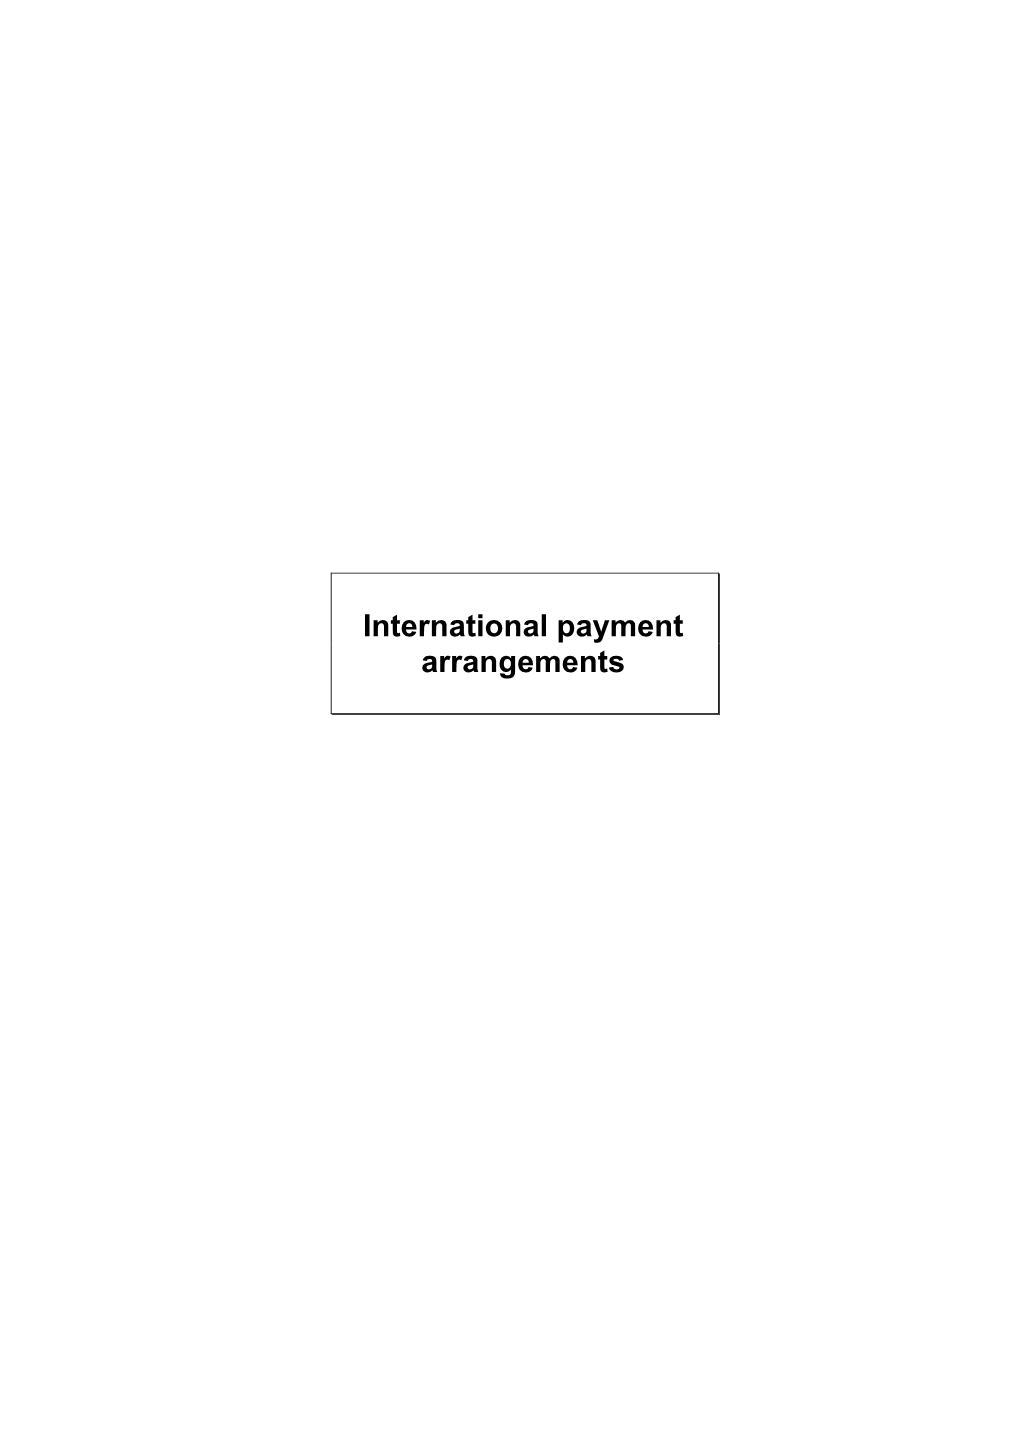 ("The Red Book"): Part 16, International Payment Arrangements